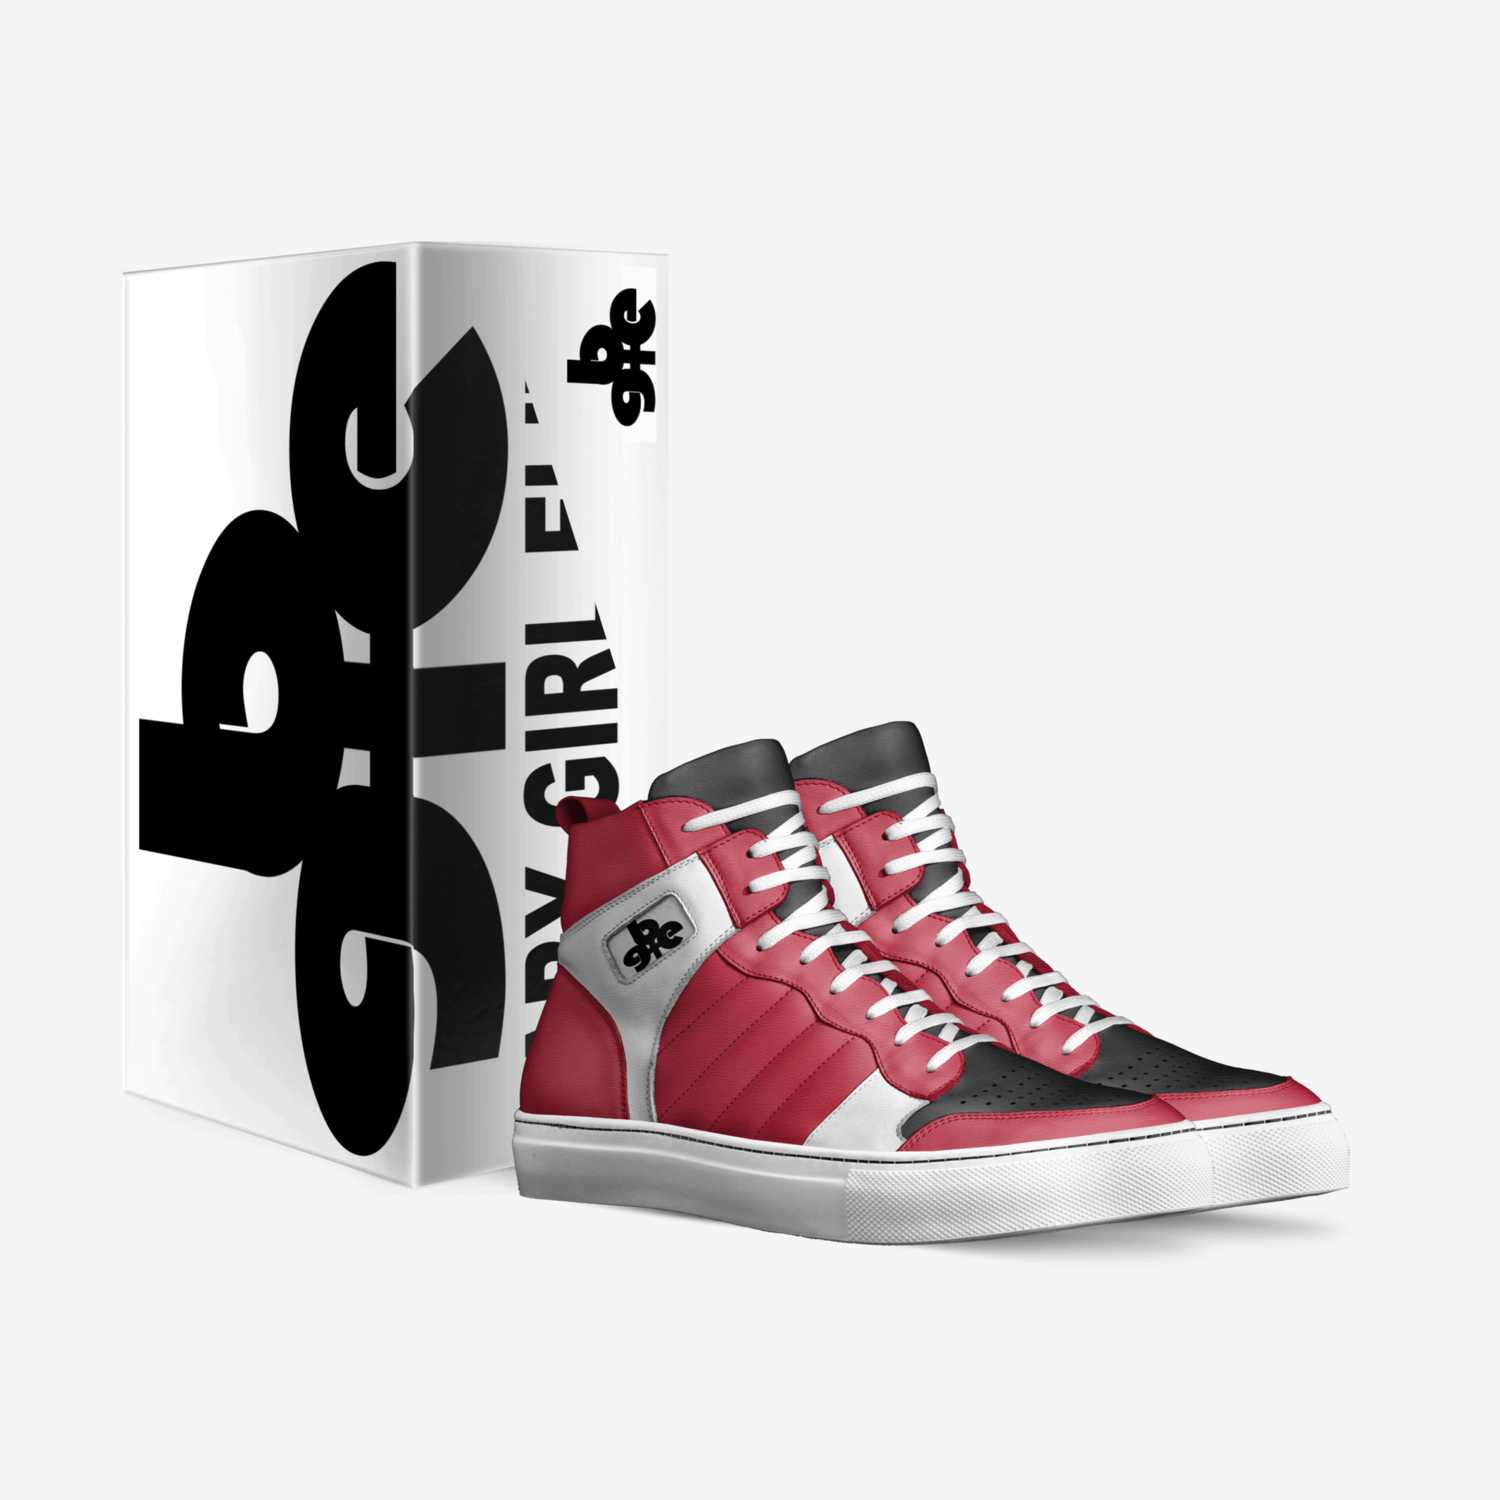 Bulls SJ1 Salto custom made in Italy shoes by Baby-girl Elite | Box view